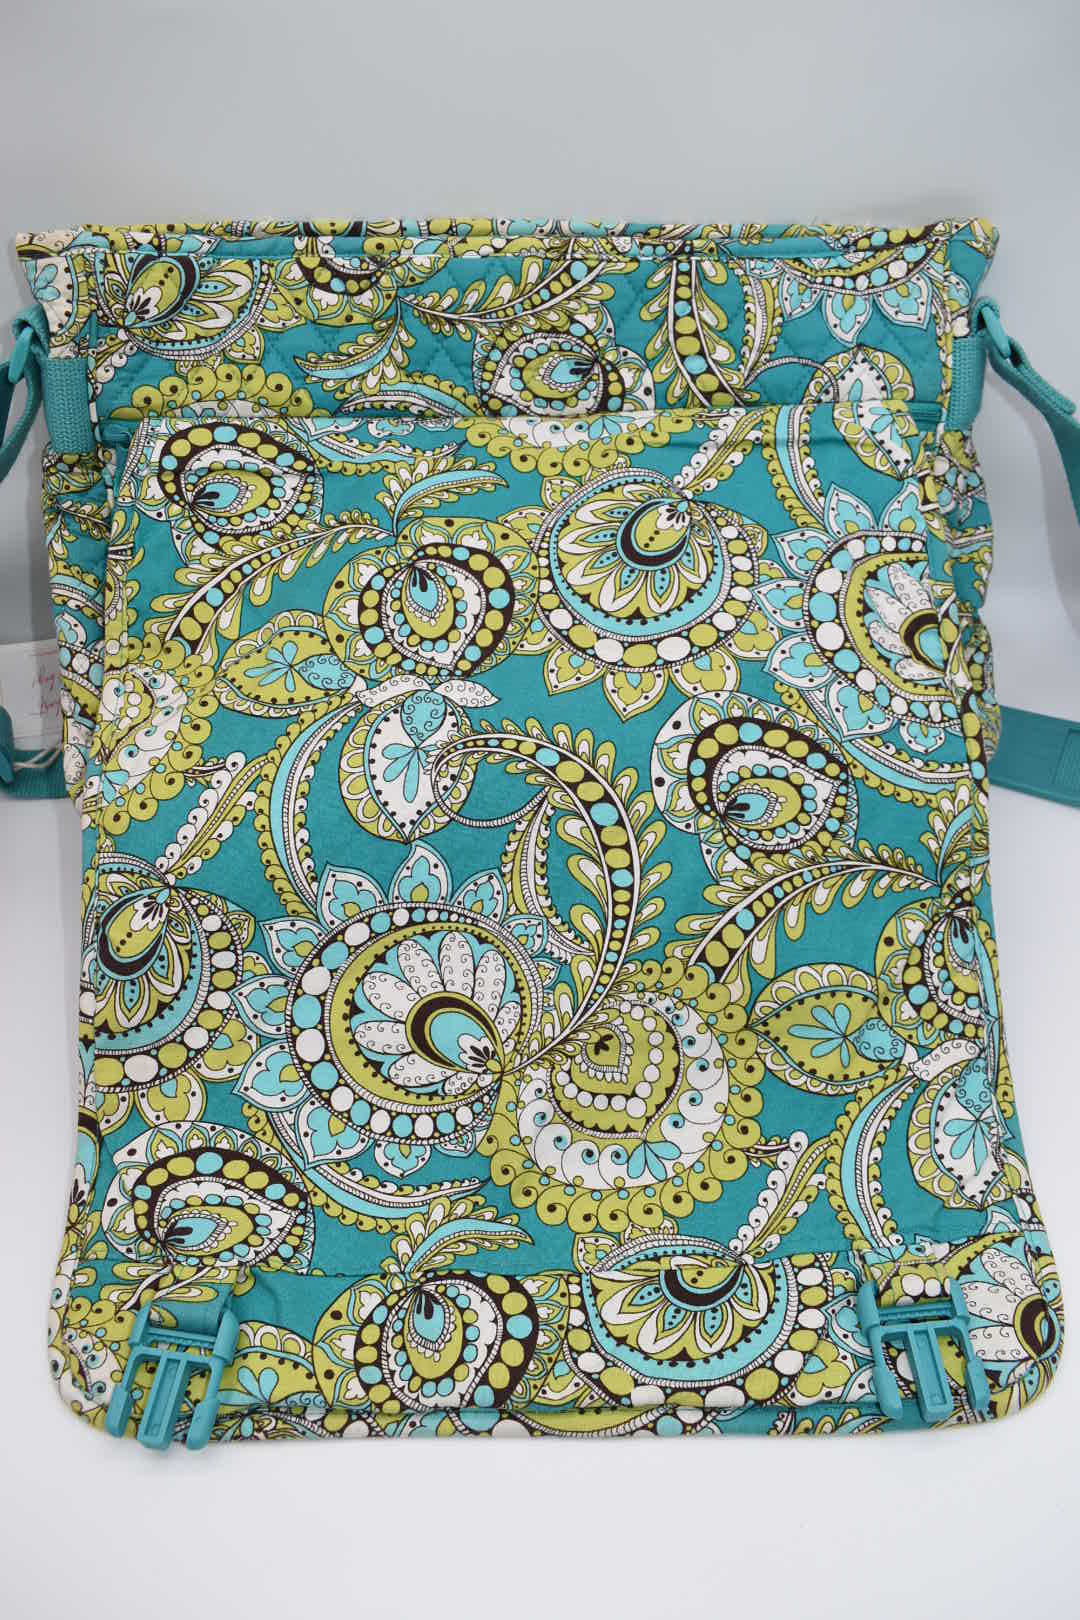 Vera Bradley Messenger Crossbody Bag in "Peacock" Pattern